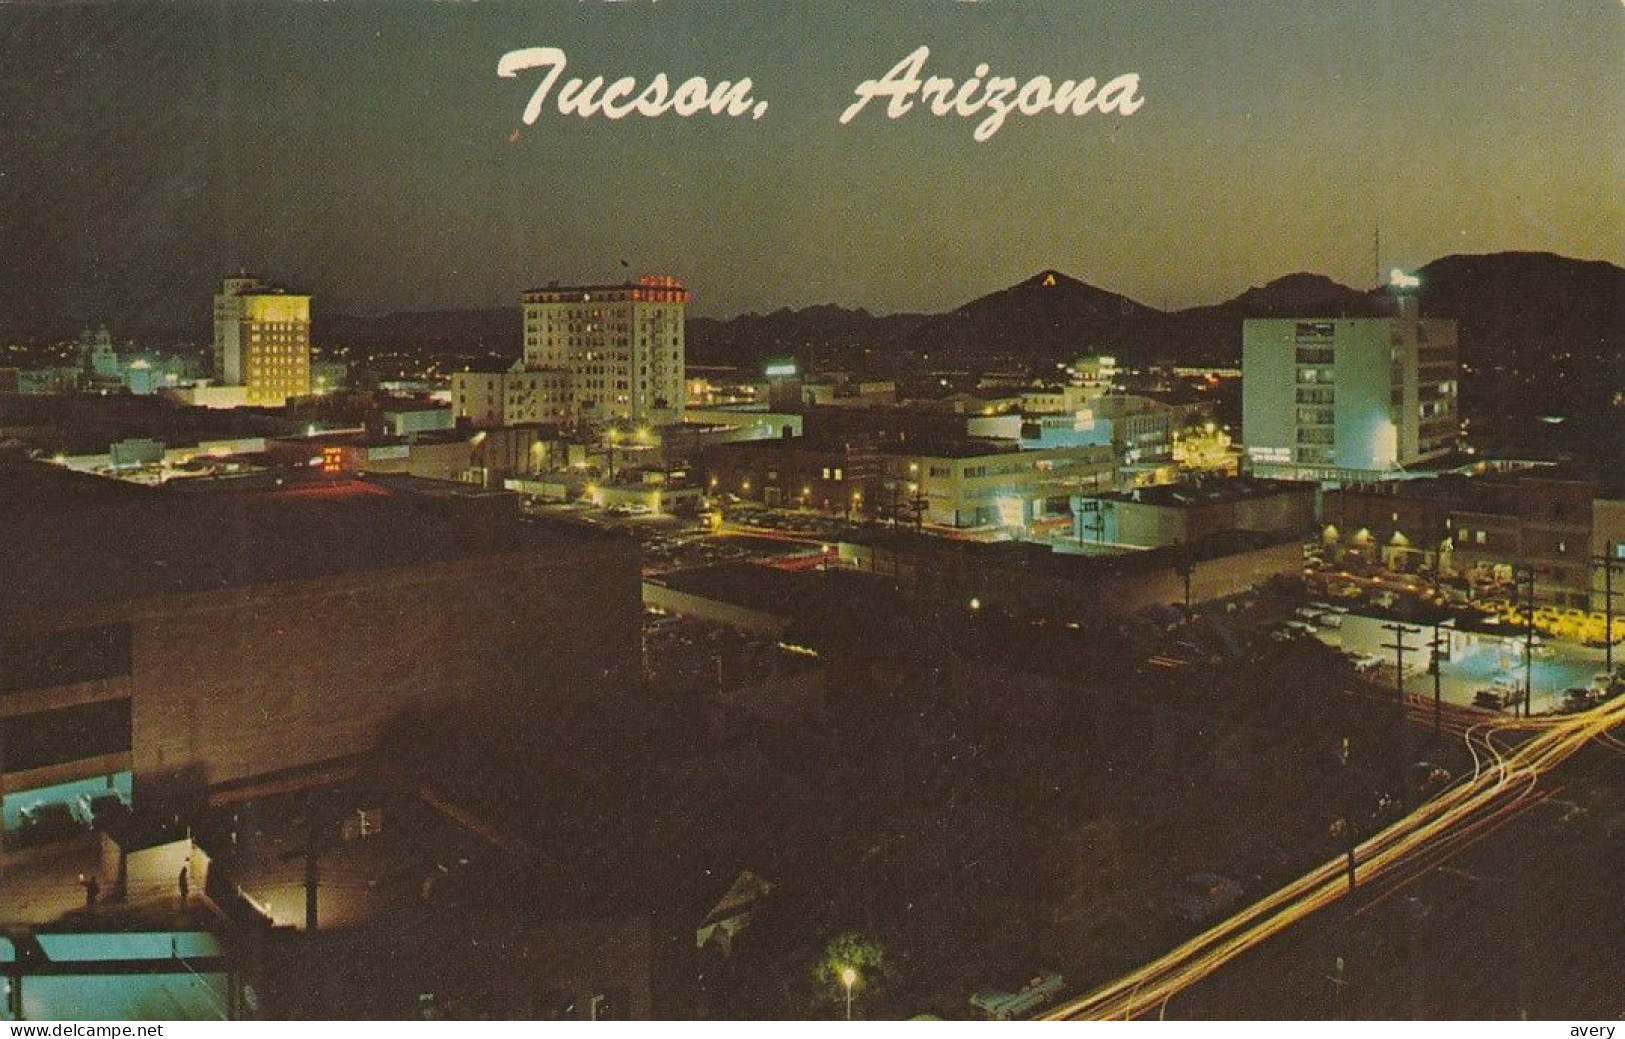 Tucson, Arizona Night Time Skyline  'A" Mountain In The Distance - Tucson